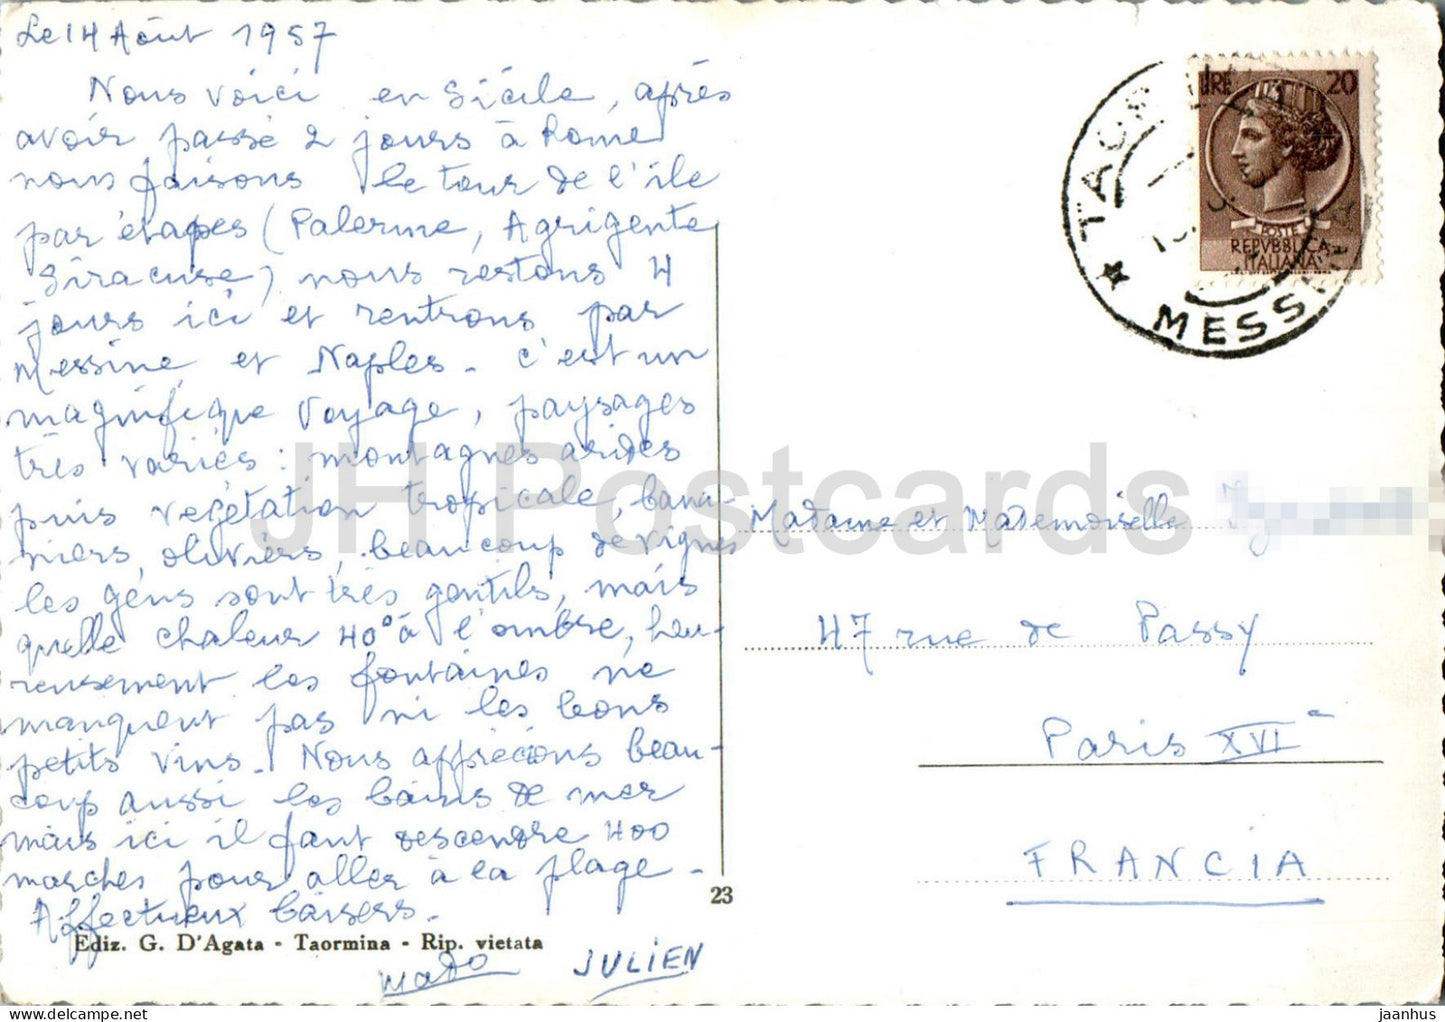 Taormina - Teatro greco romano e l'Etna - Antike Welt - 23 - alte Postkarte - 1957 - Italien - gebraucht